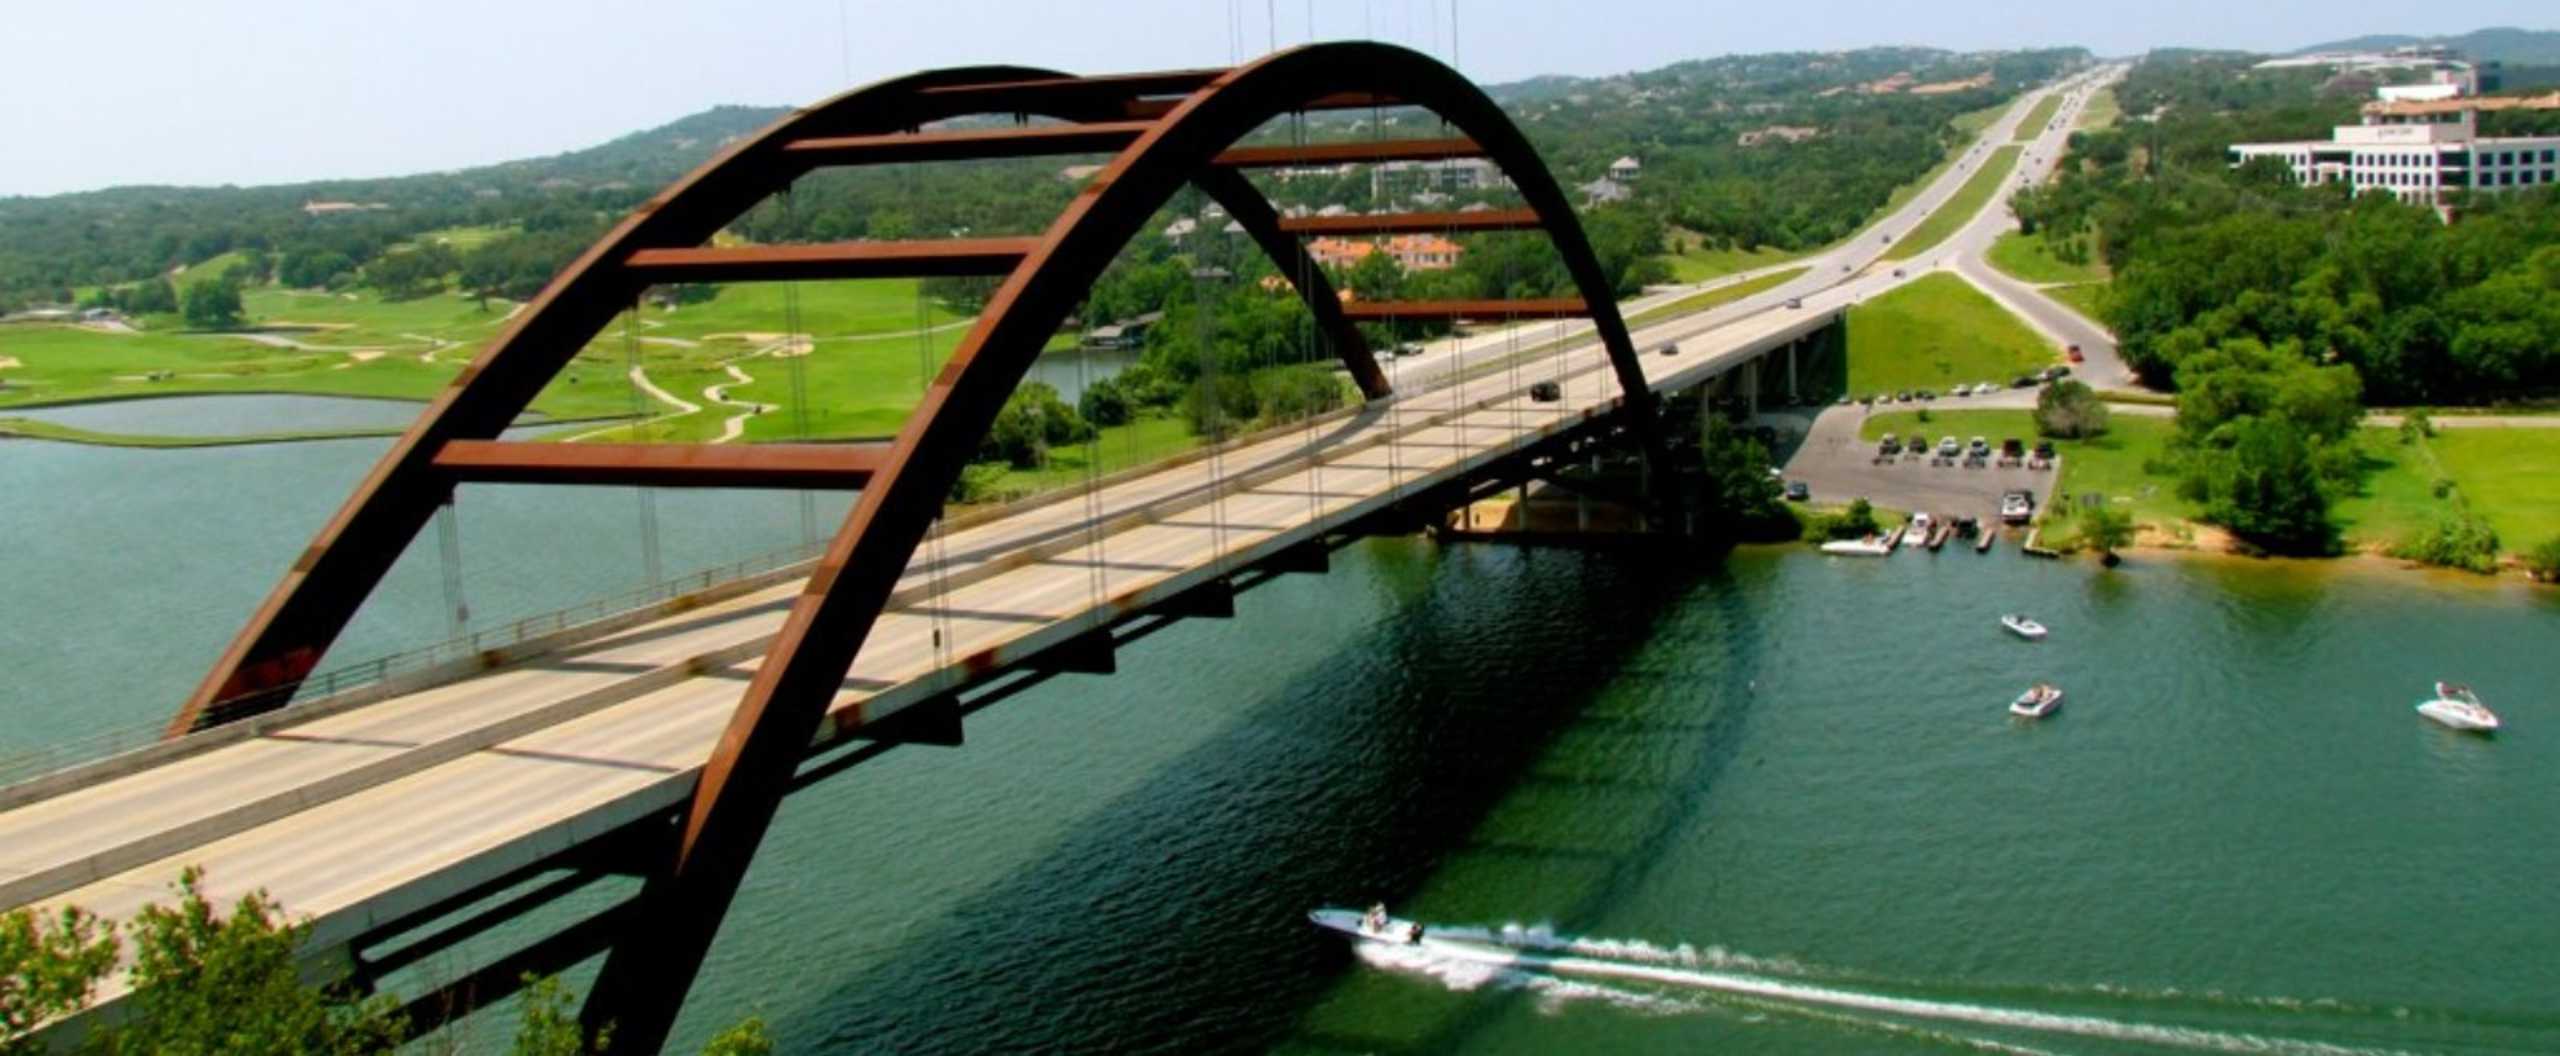 Austin Pennybacker Bridge Photo Courtesy of Jeff Gunn, Atlanta, USA